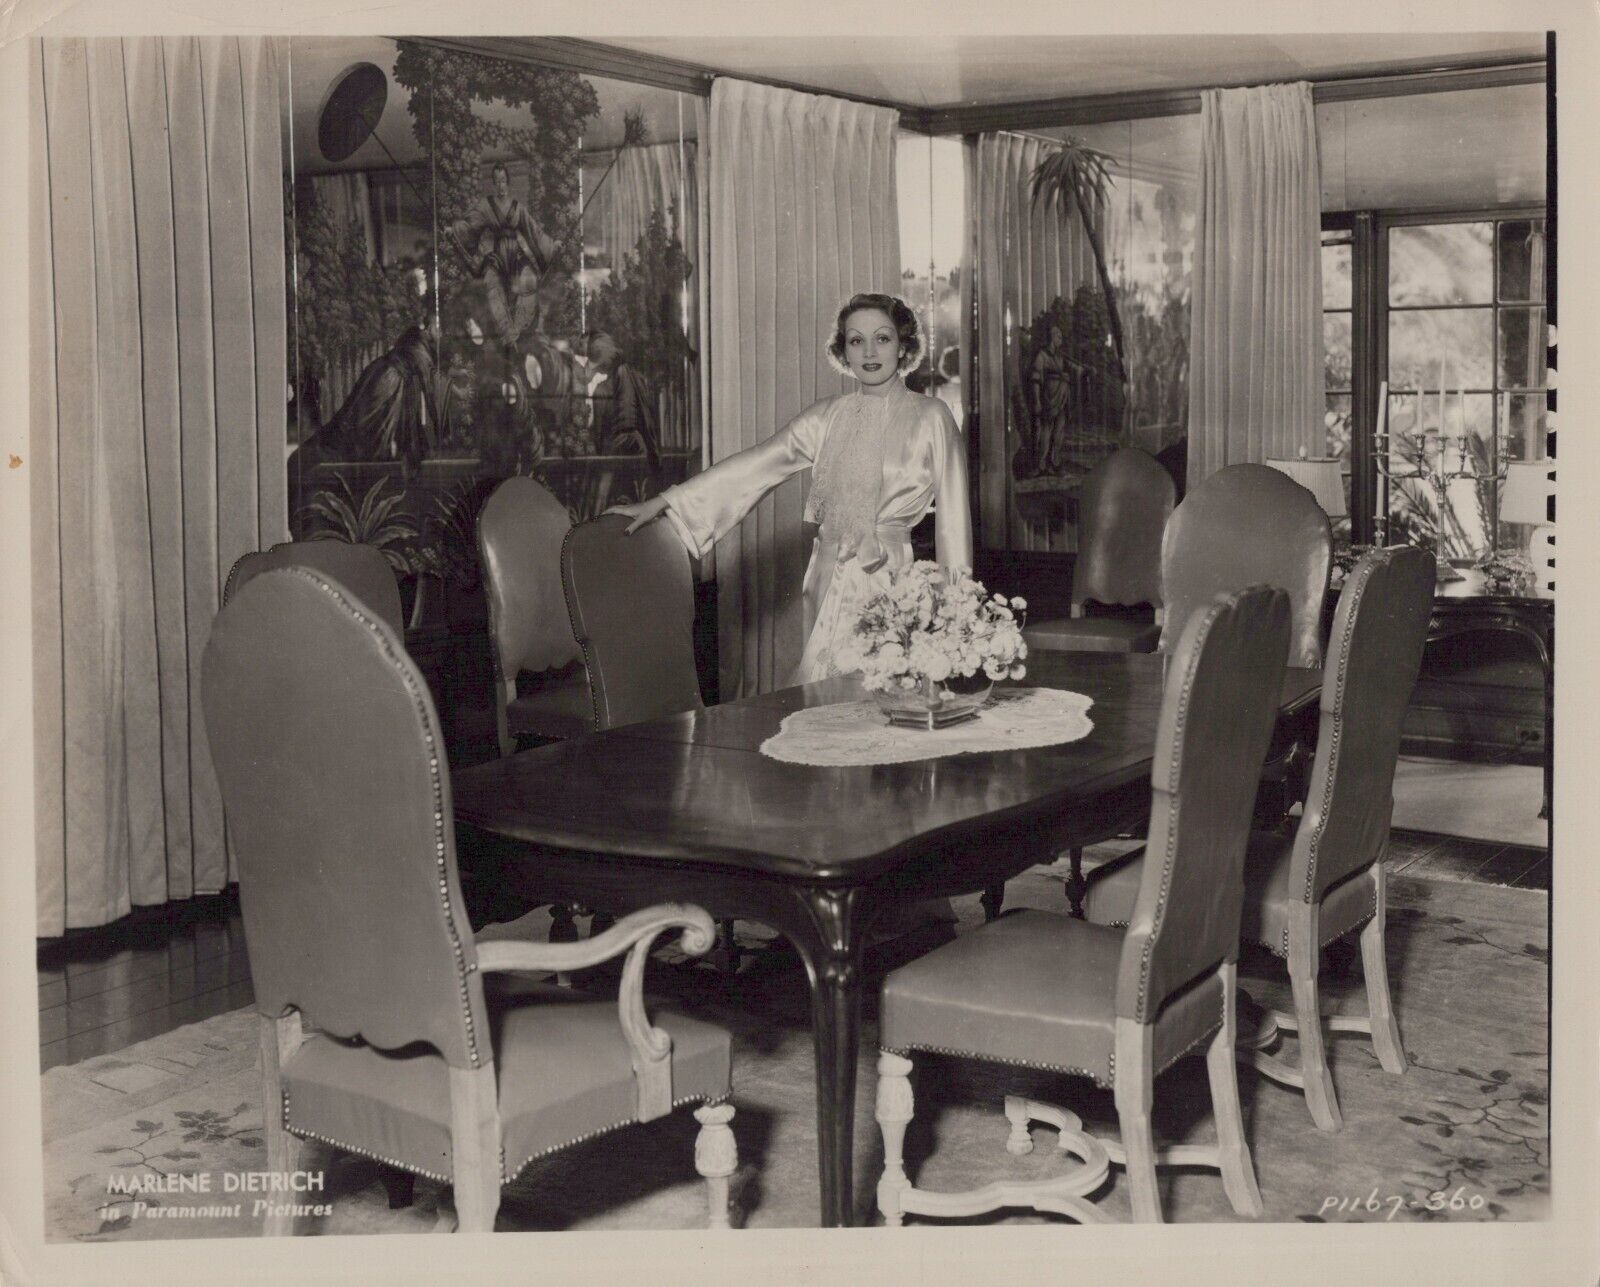 HOLLYWOOD BEAUTY MARLENE DIETRICH STYLISH POSE STUNNING PORTRAIT 1940s Photo C33